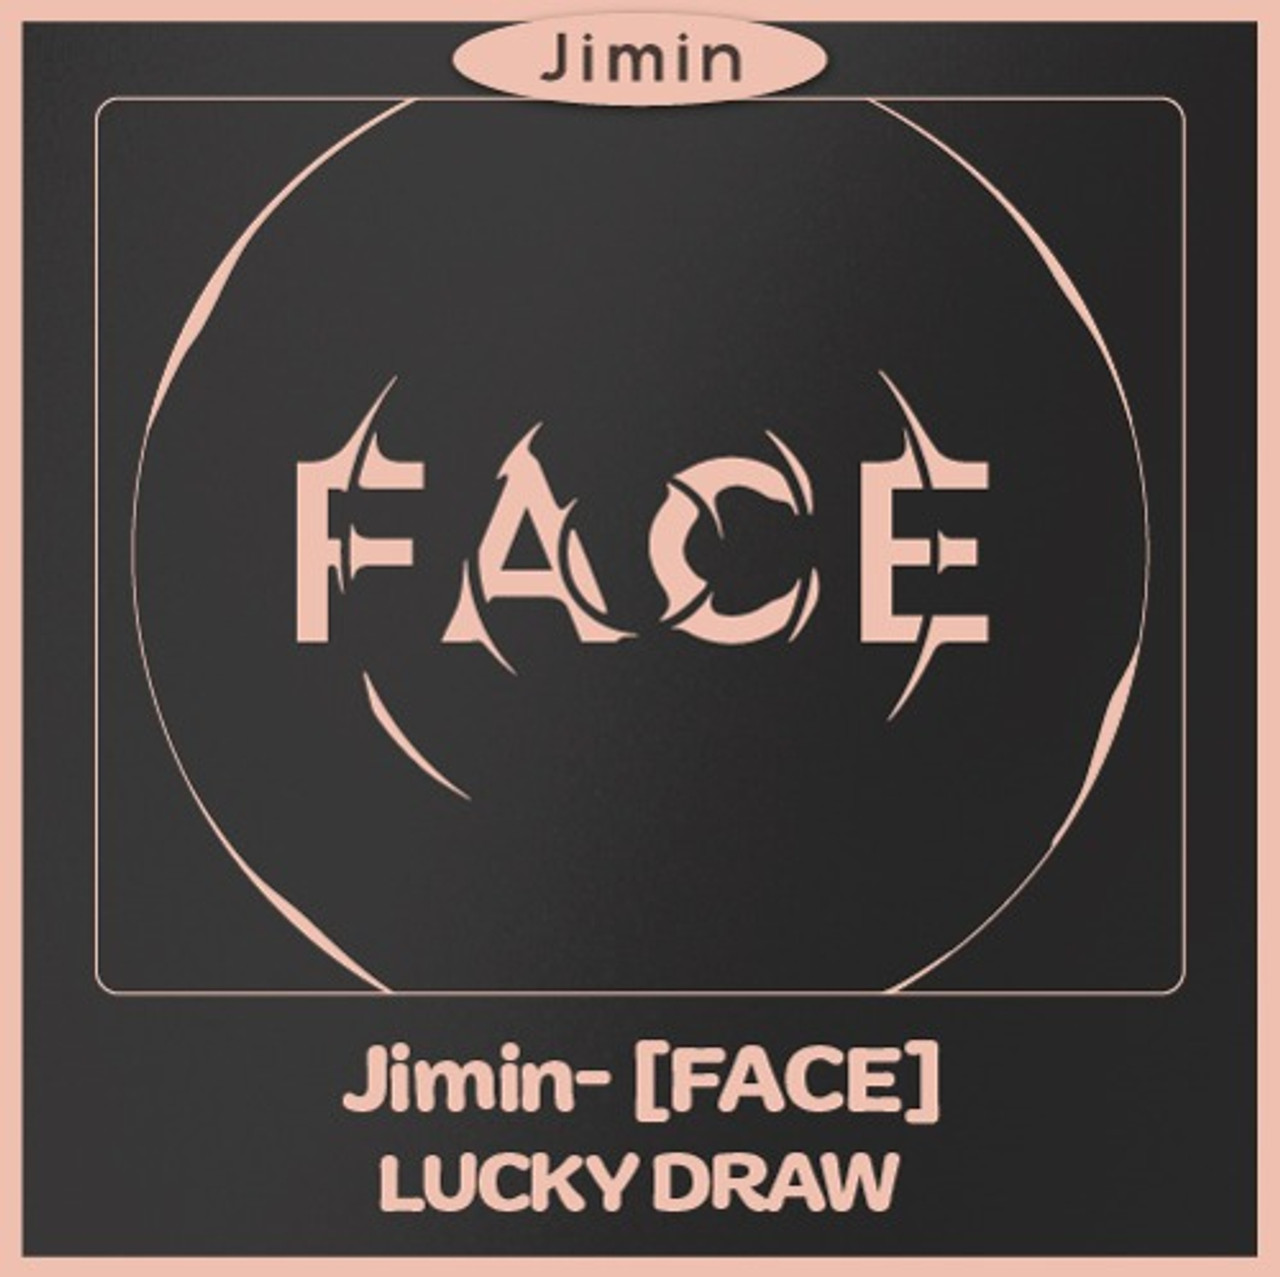 Lucky draw] JIMIN - [FACE - Random] (SW) - interAsia